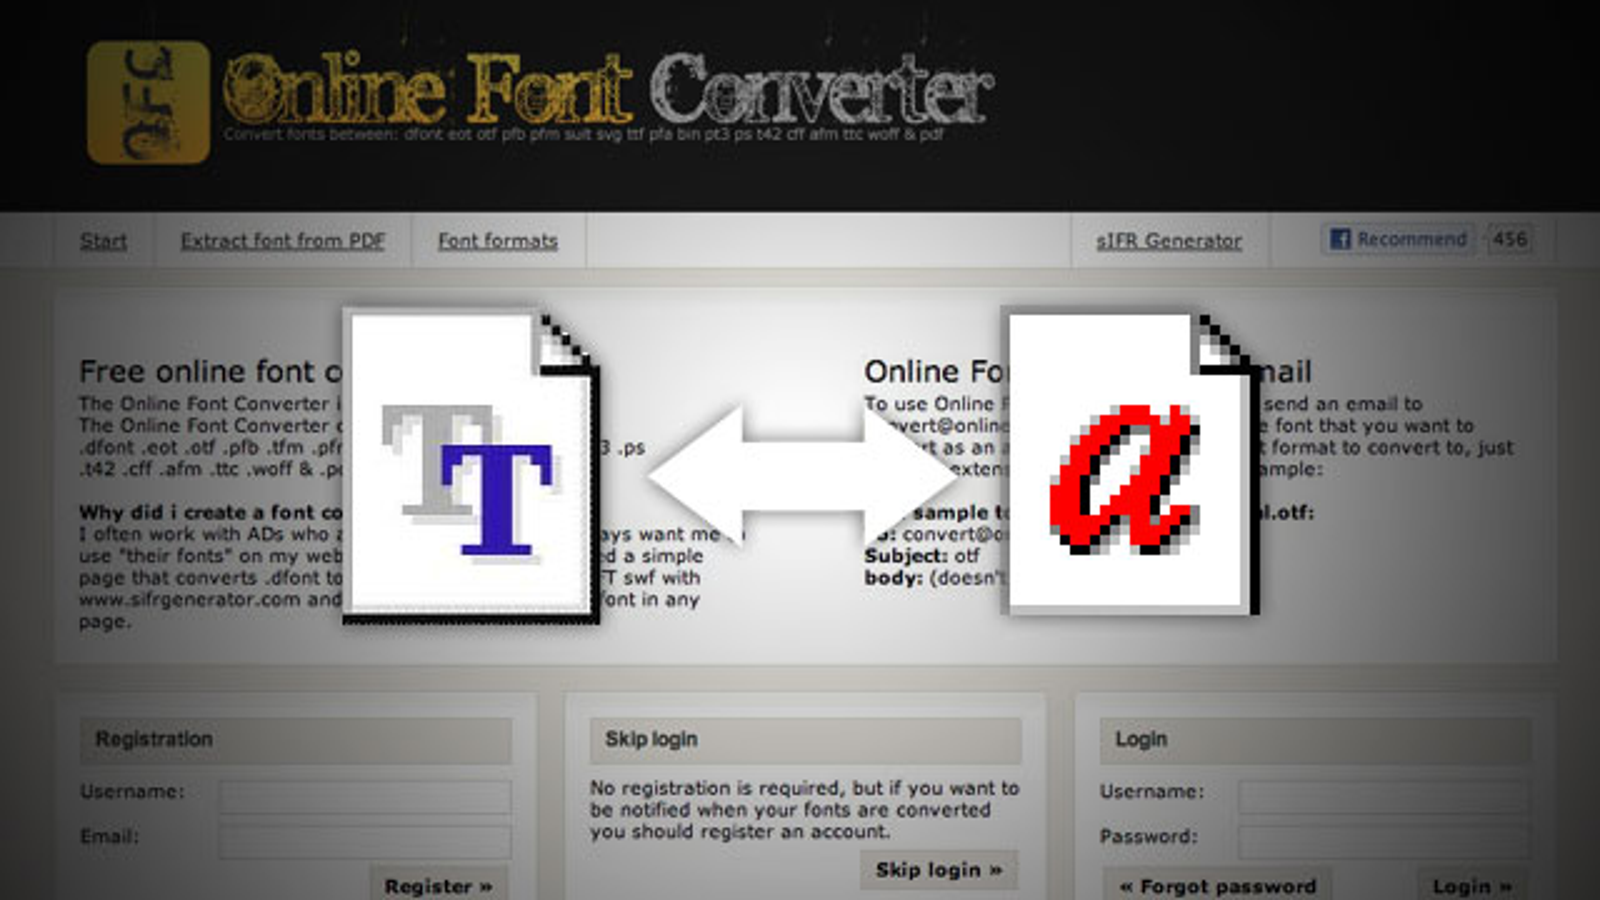 mac fonts to pc fonts converter